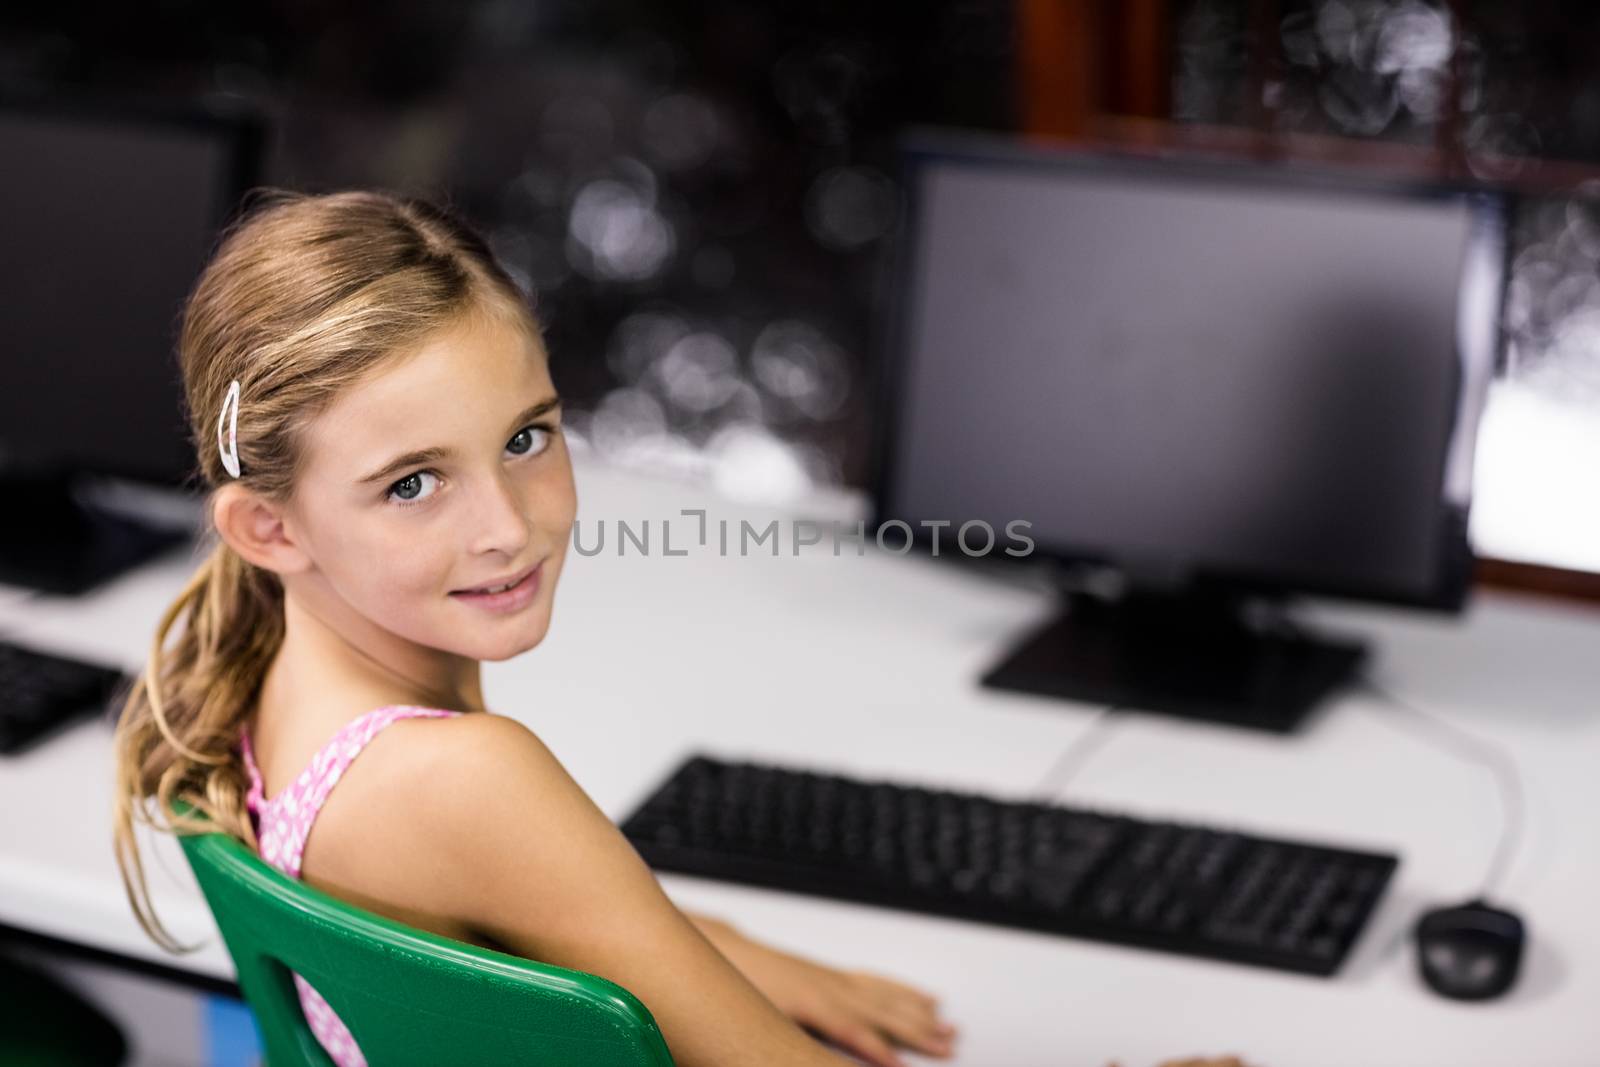 Children using technology at school